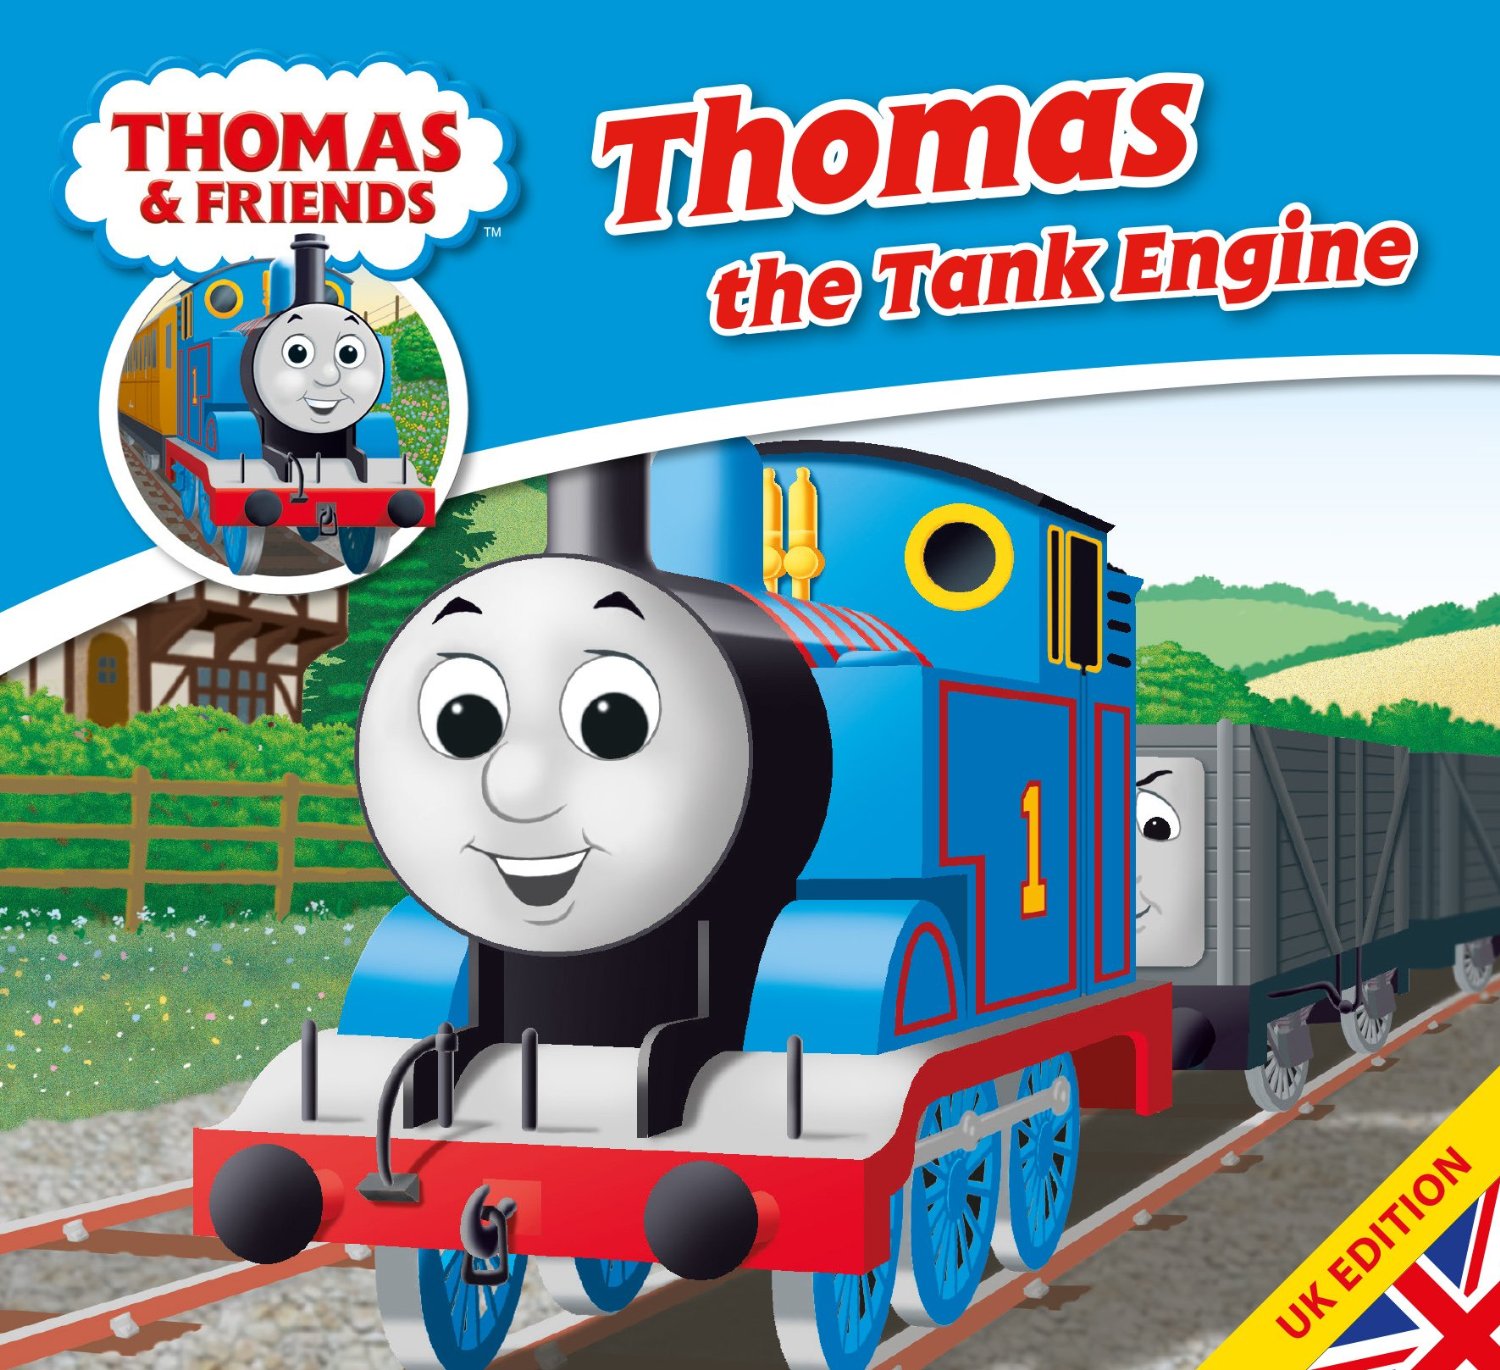 Thomas (Story Library book)/Gallery | Thomas the Tank Engine Wikia ...